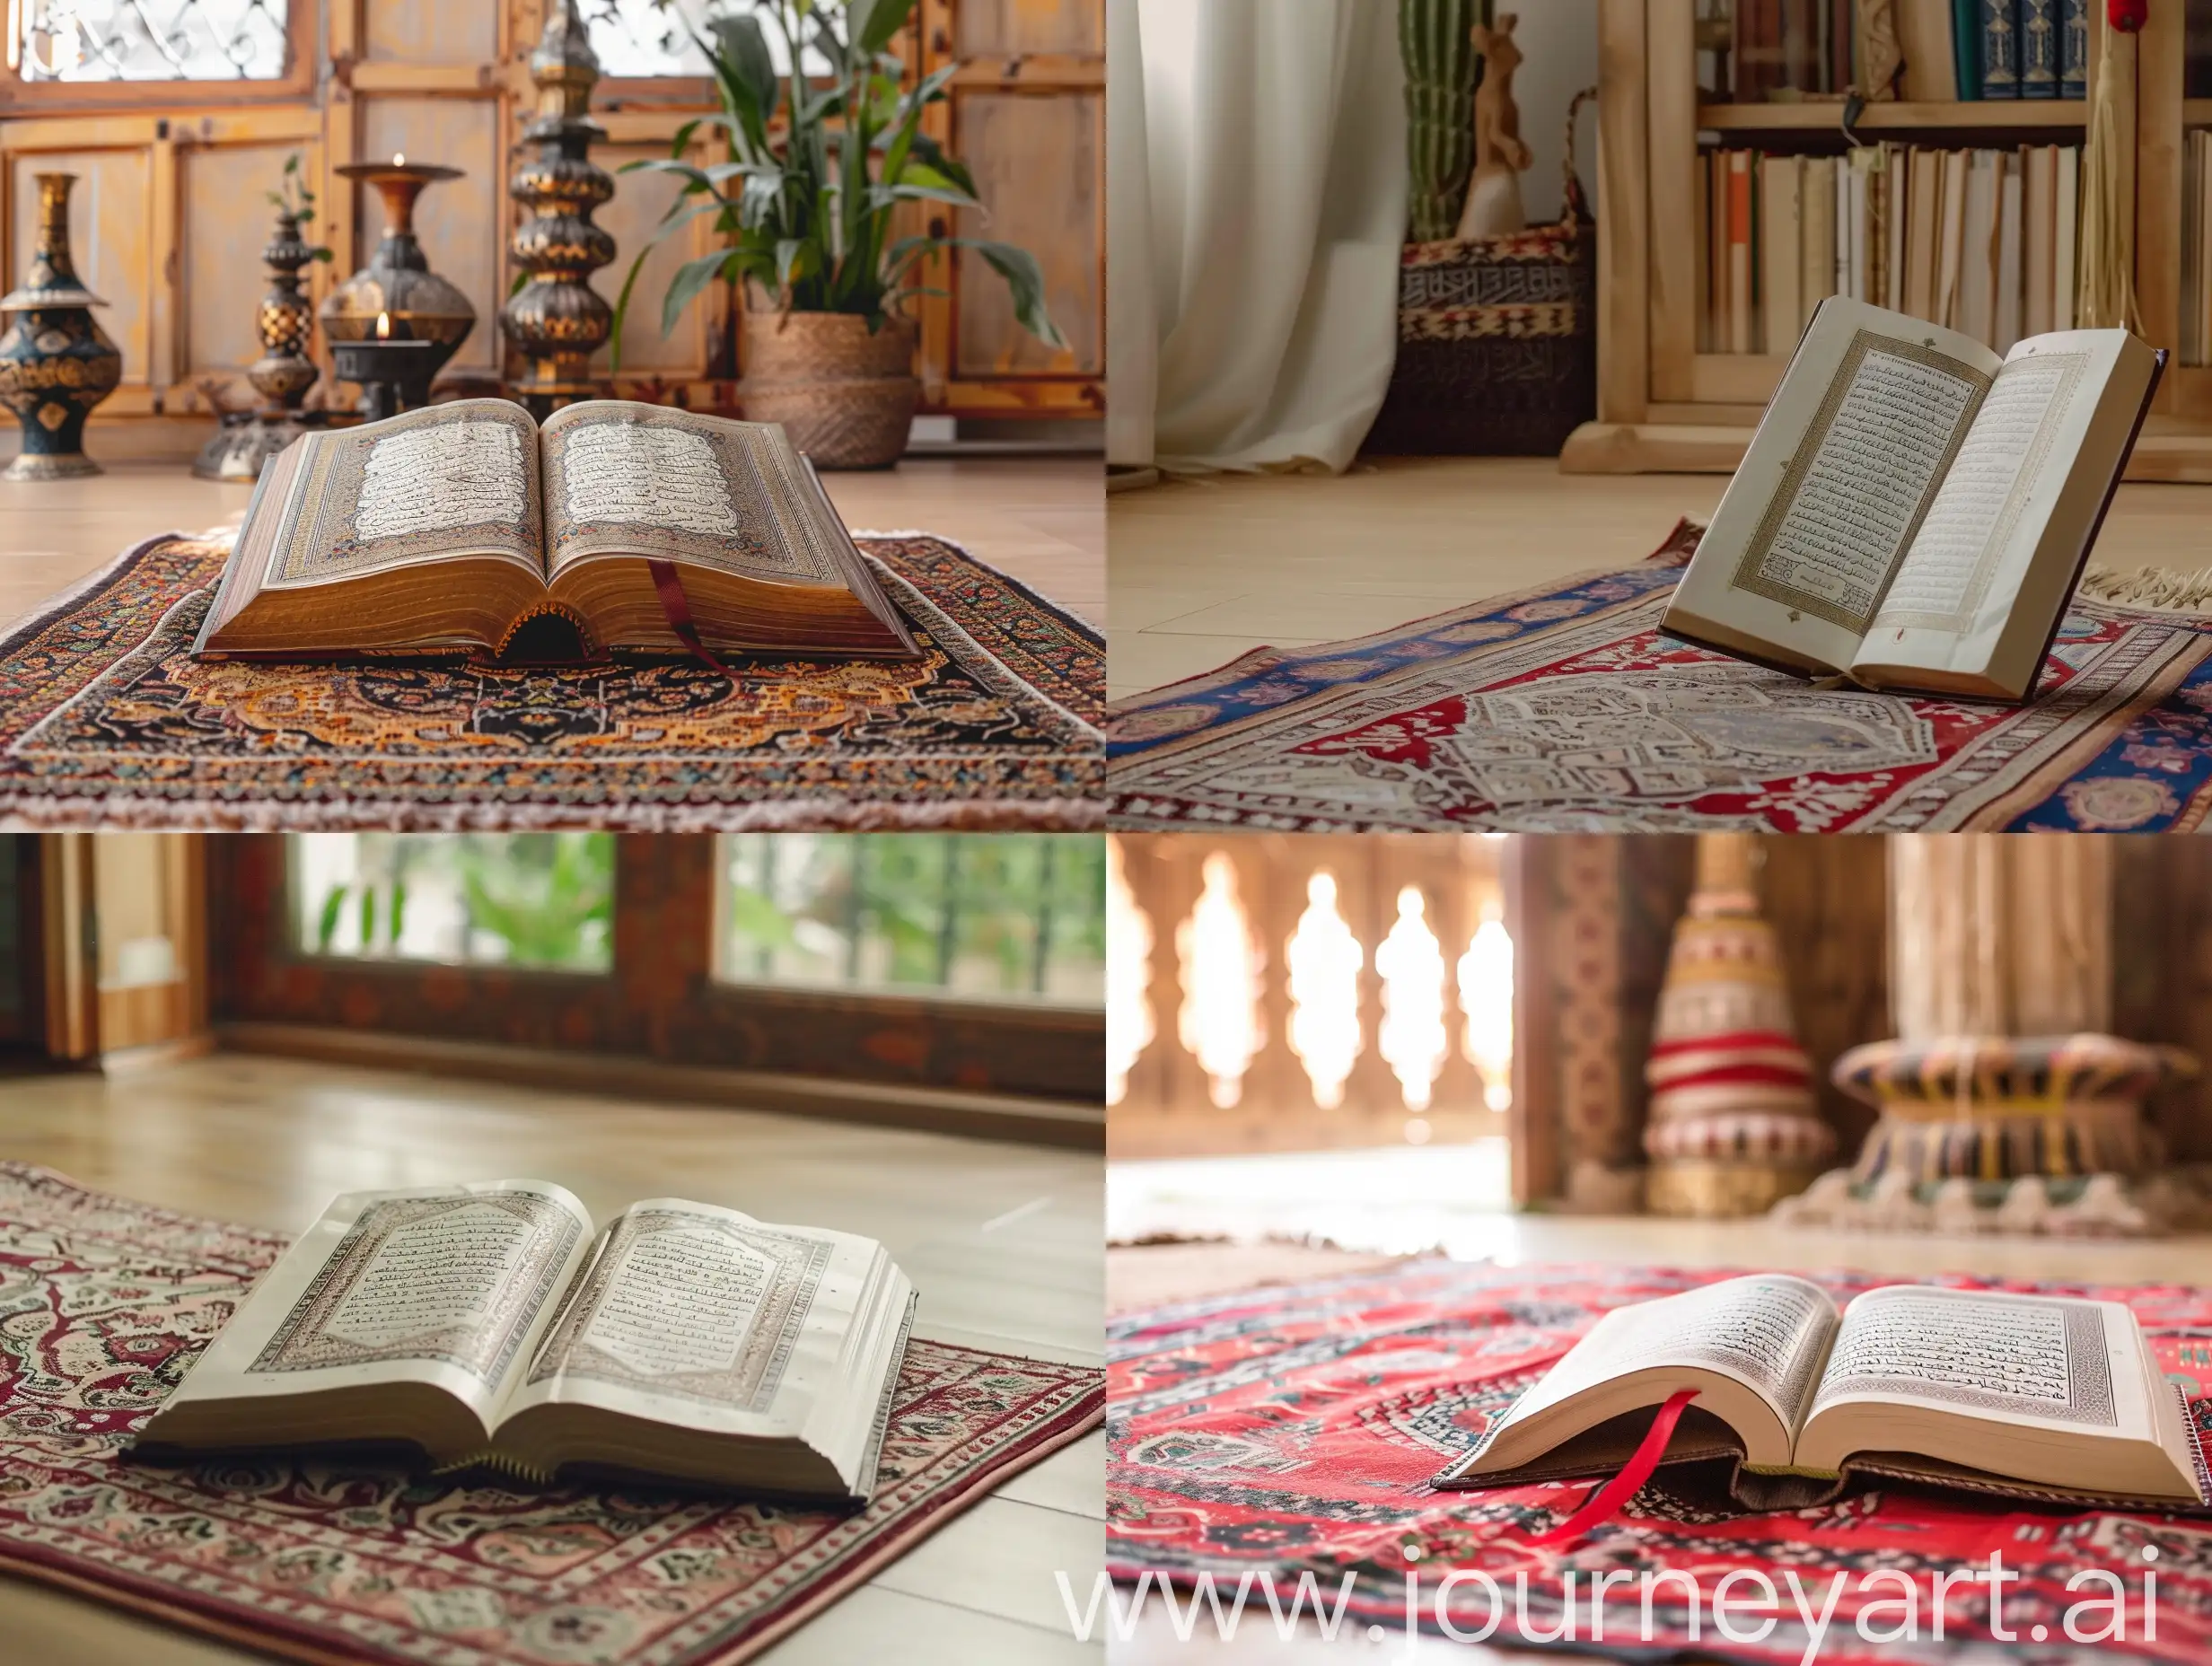 Opening Quran on Muslim prayer mat indoors